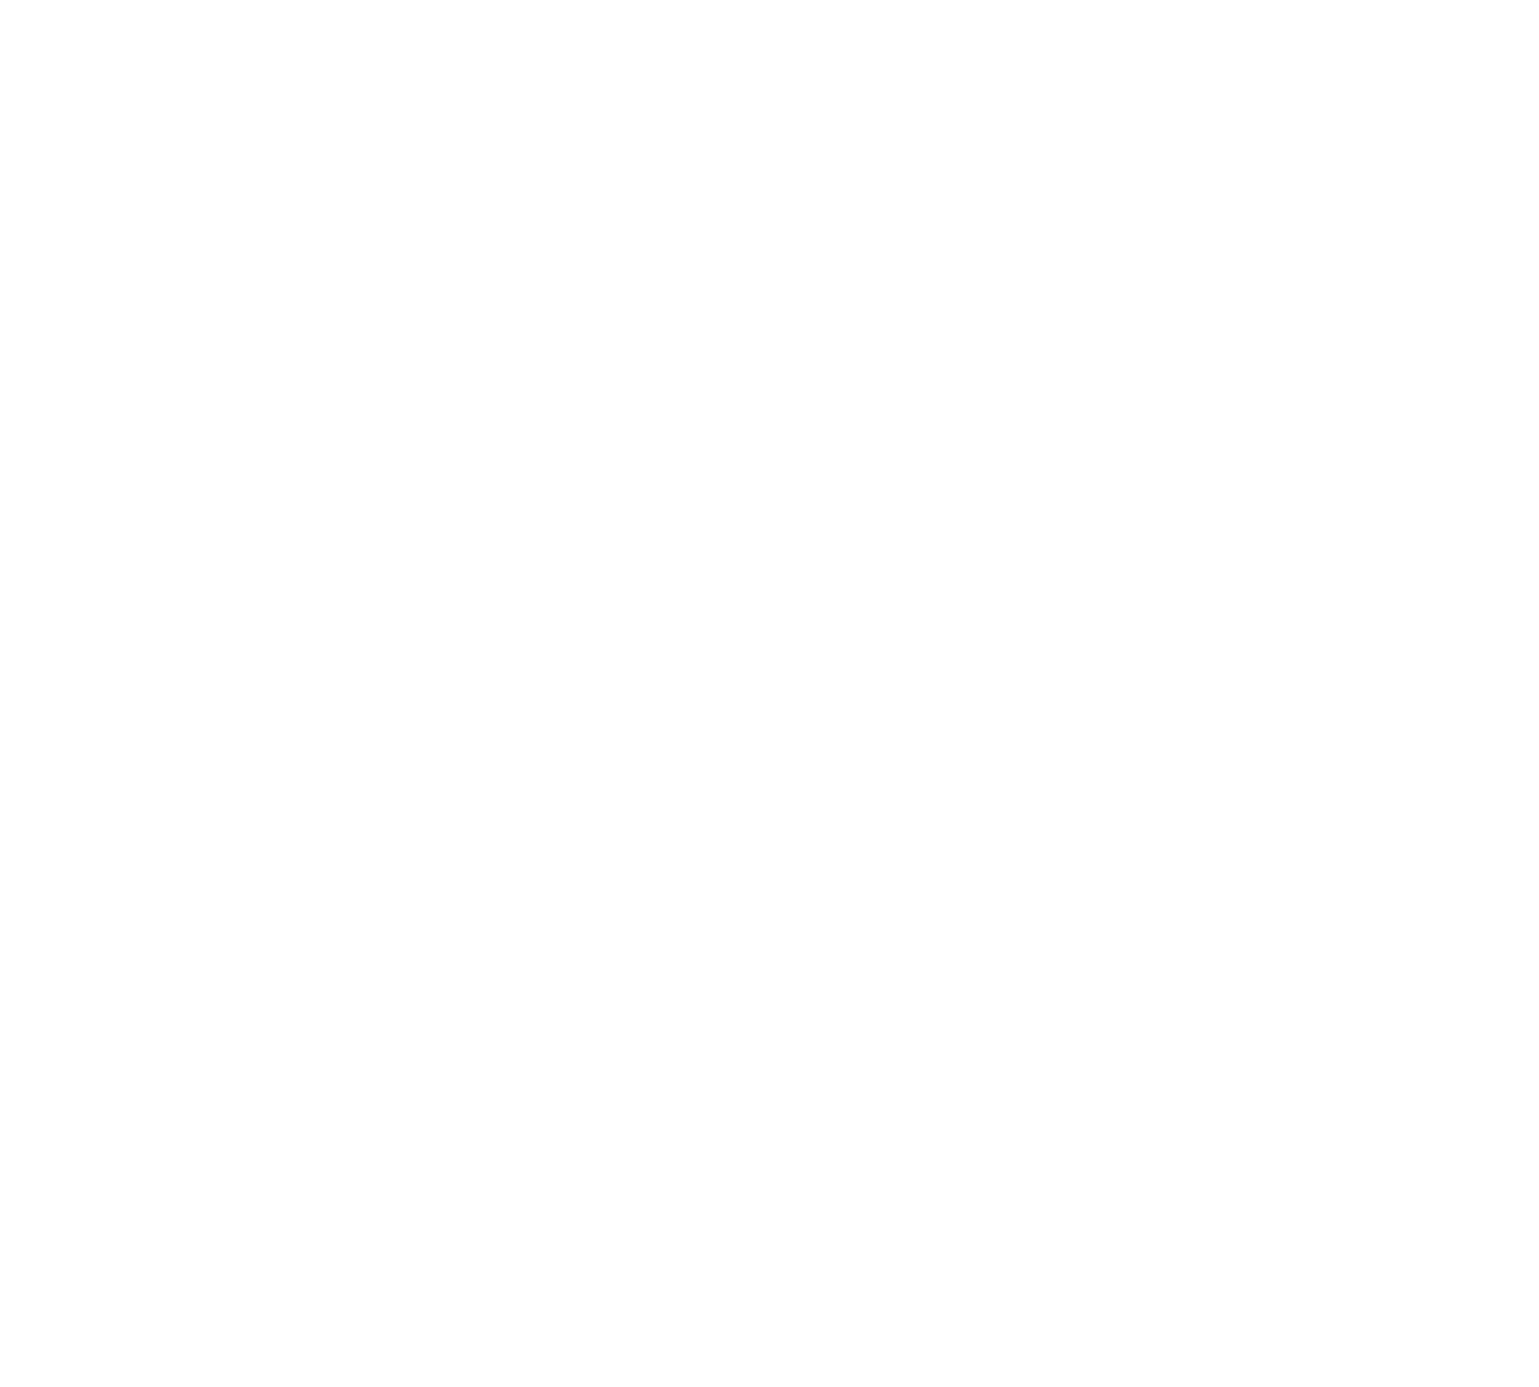 CONSOL Energy logo for dark backgrounds (transparent PNG)